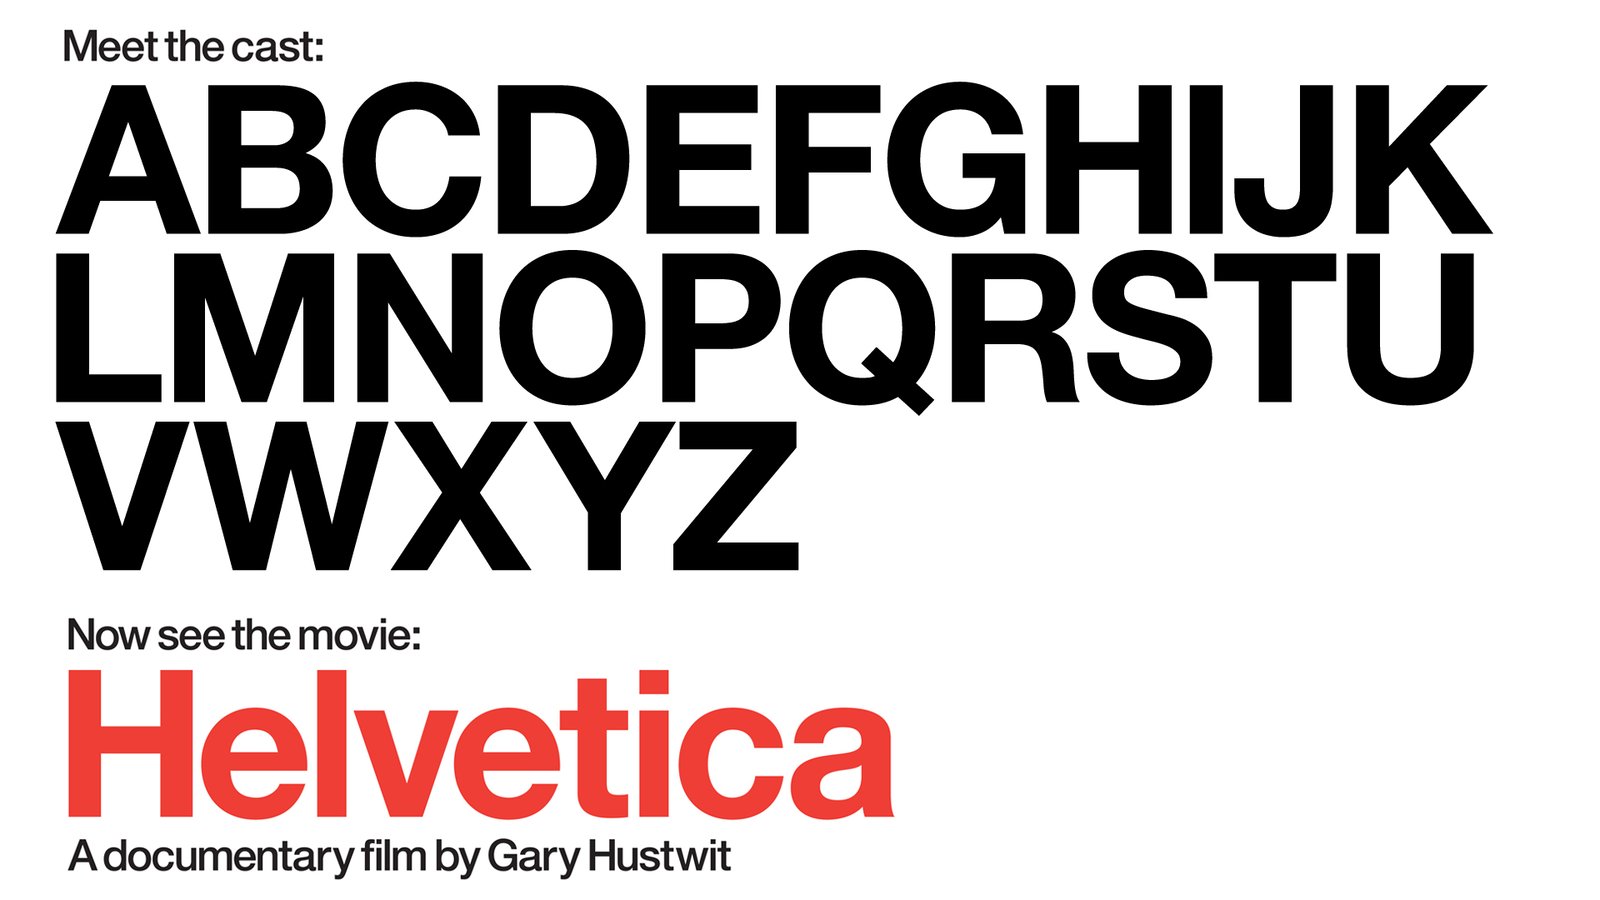 Helvetica movie poster